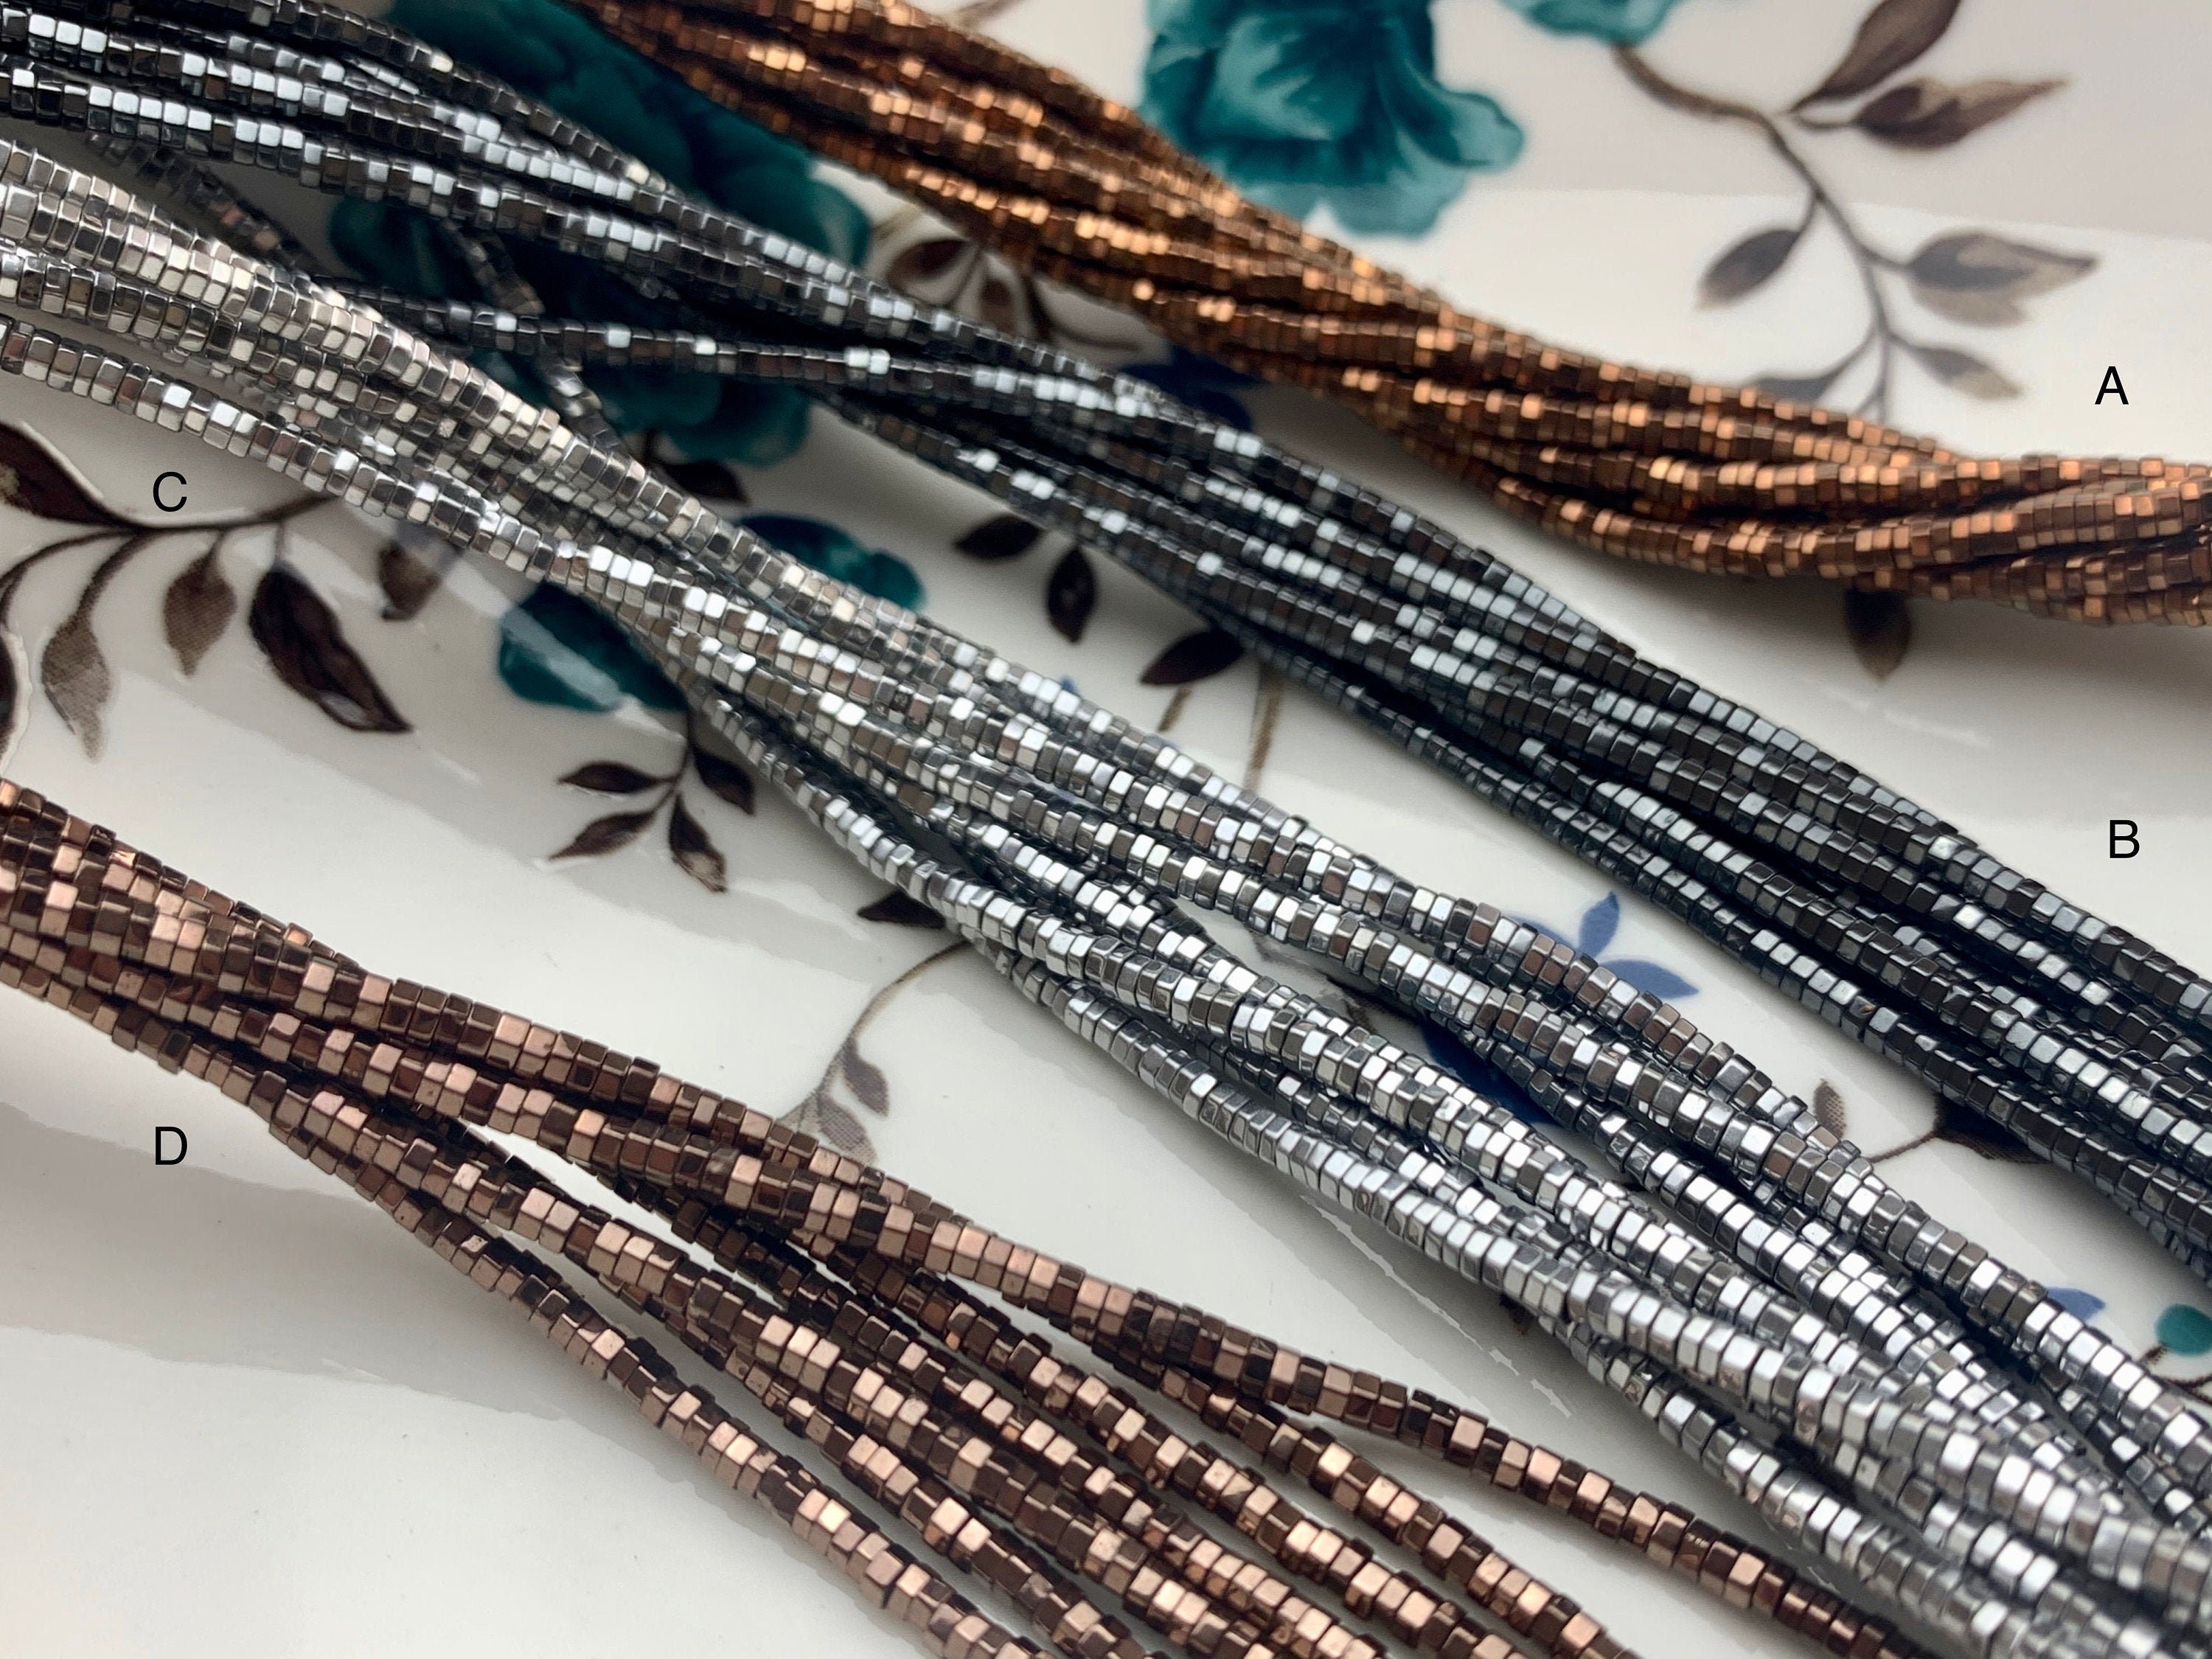 2mm, 3mm, 4mm, 6mm, 8mm Hematite Beads, Electroplated Golden Hematite Beads,  Spacer Beads, Jewelry Making Beads, Gold Hematite 